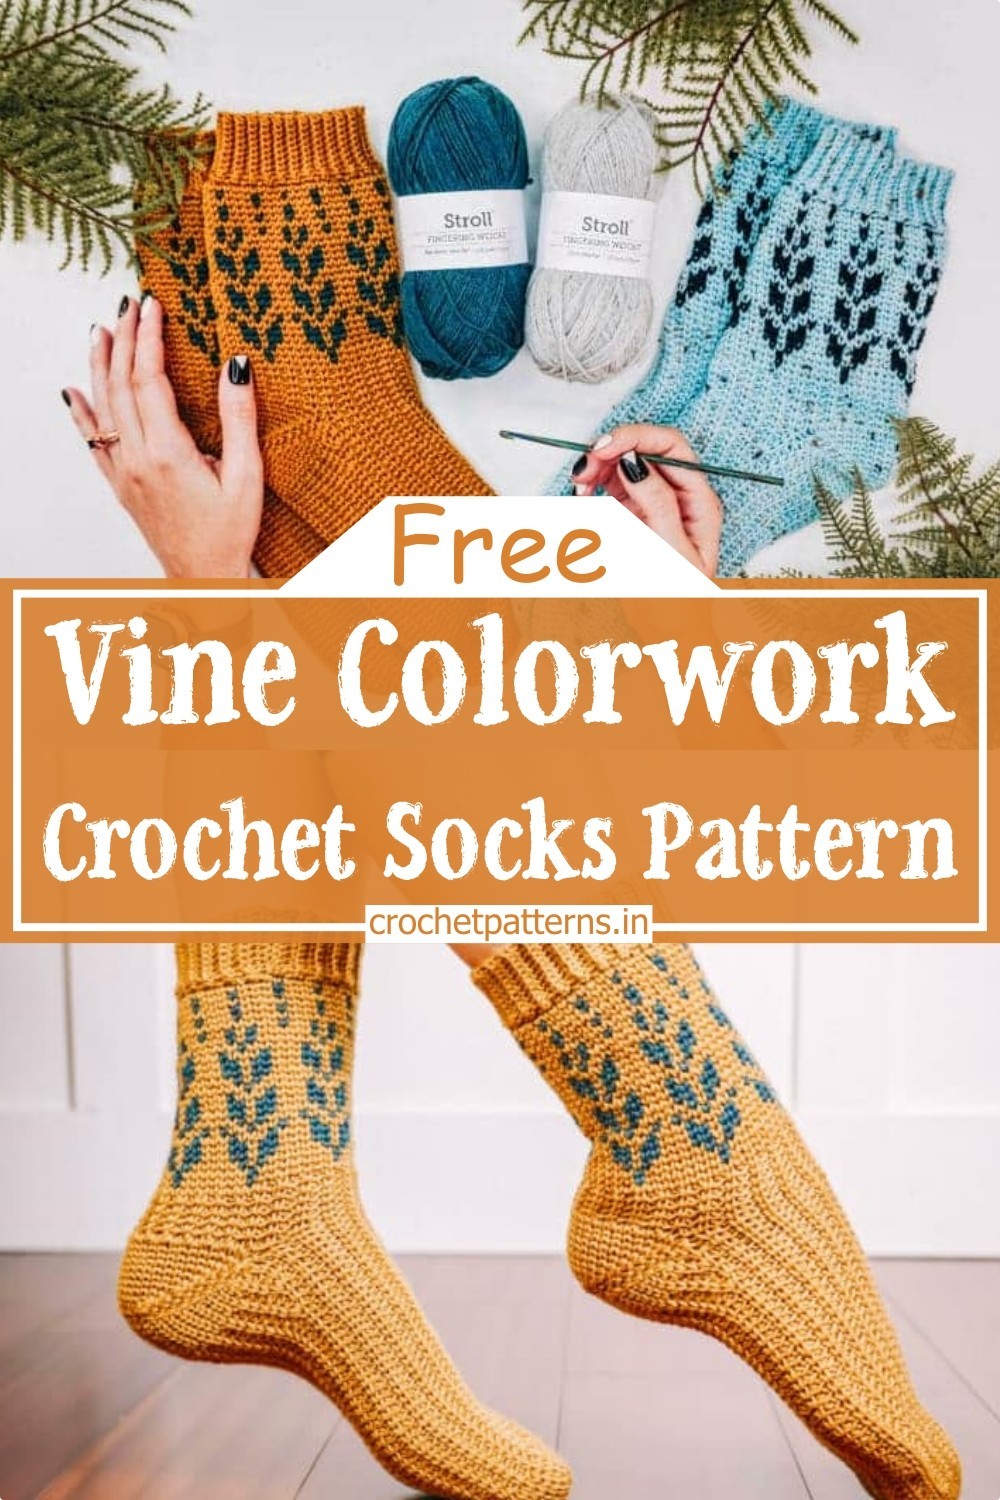 Vine Colorwork Crochet Socks Pattern